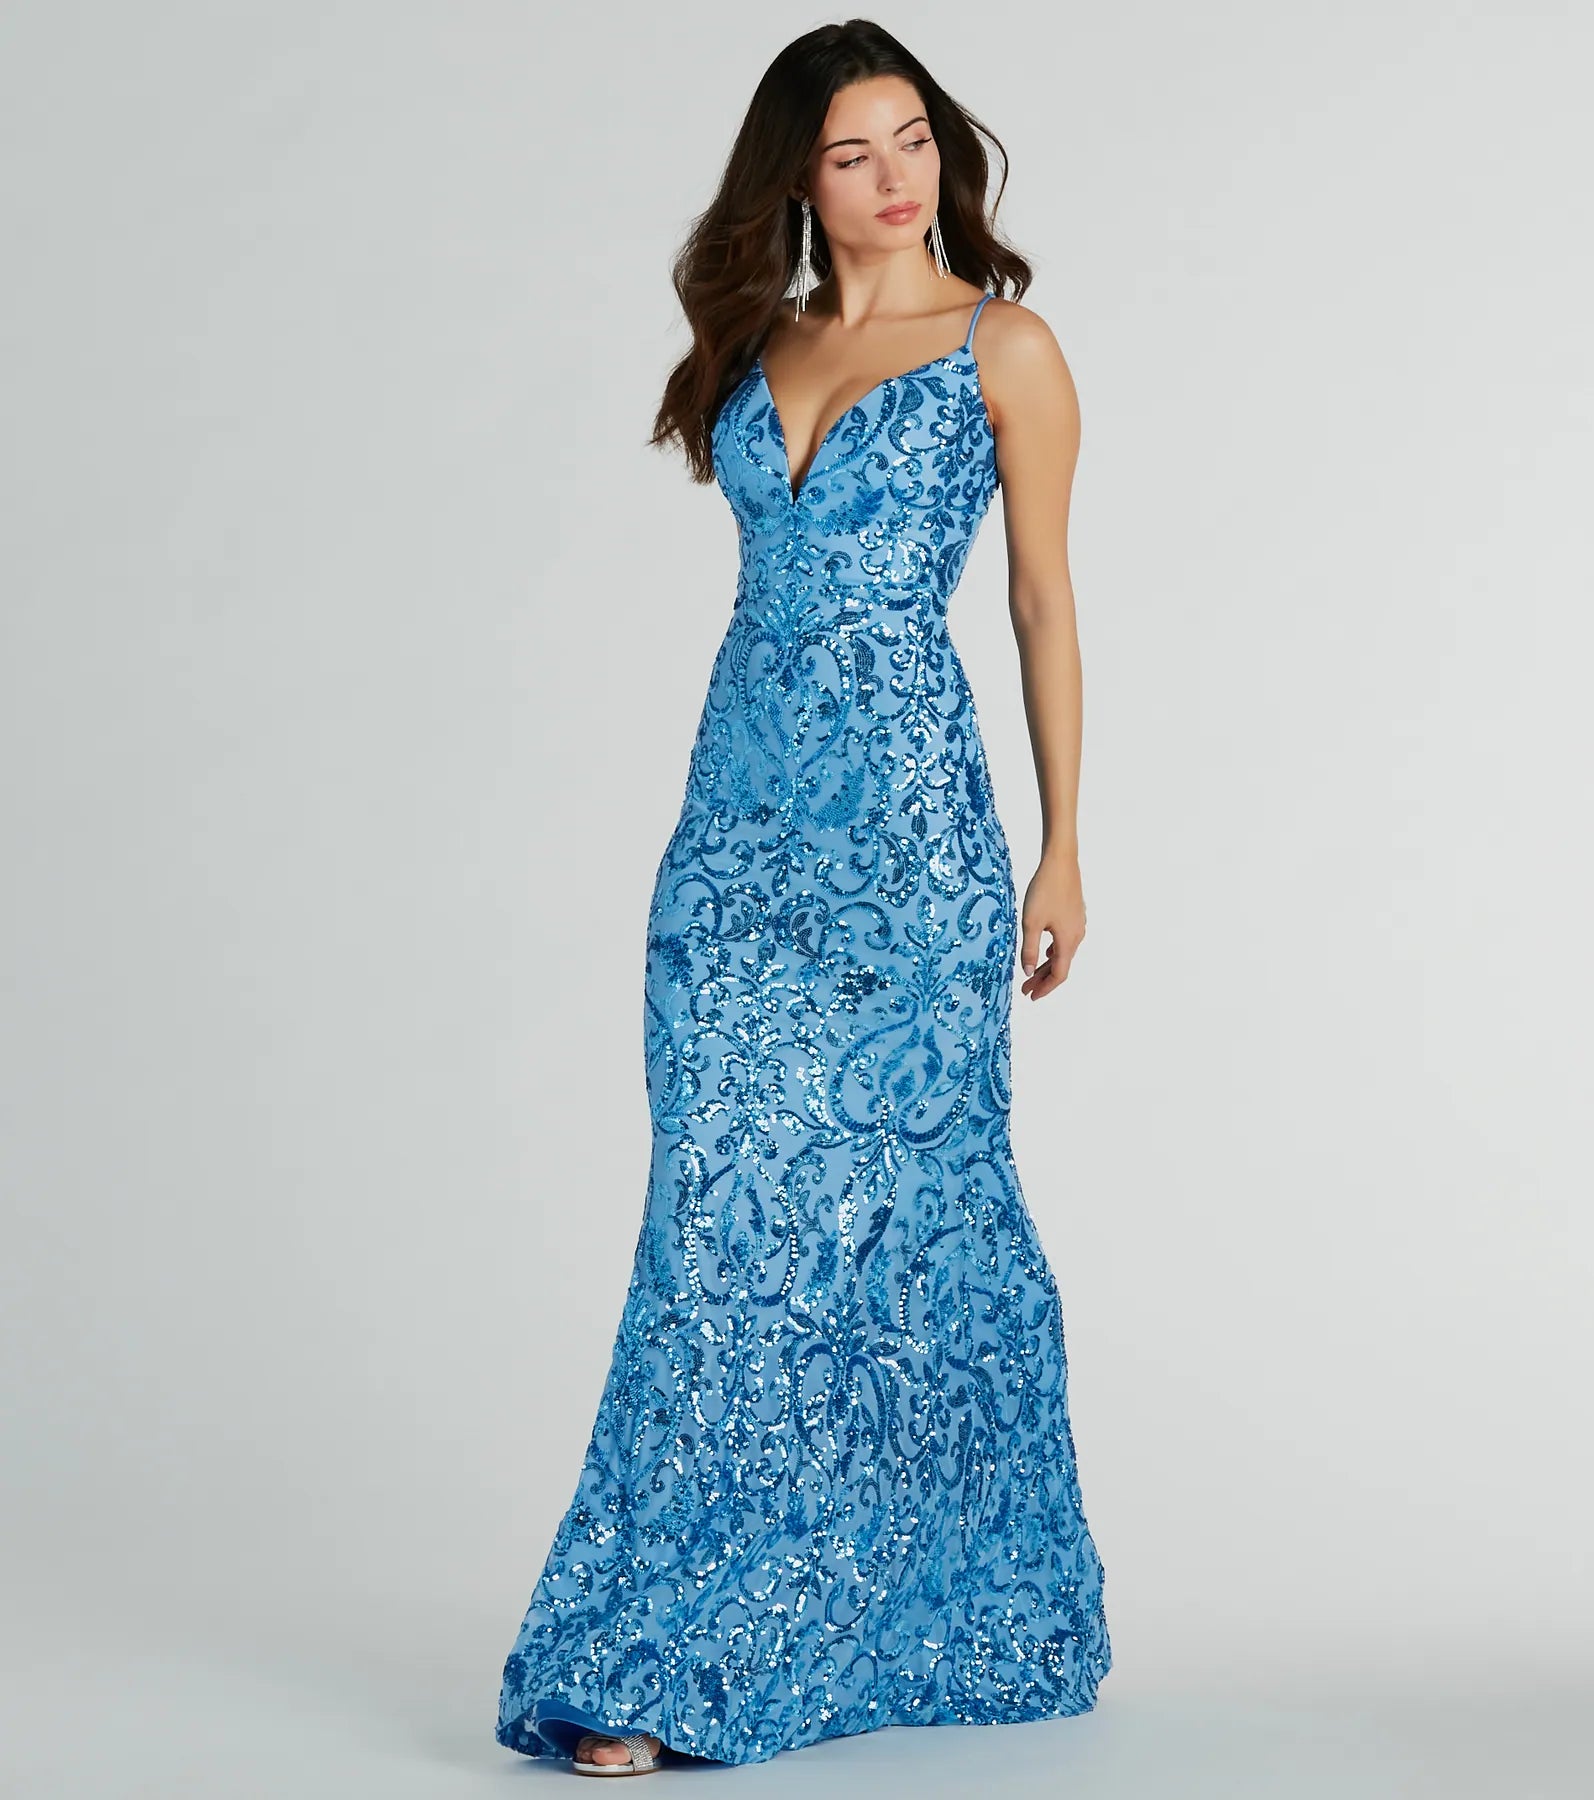 V-neck General Print Knit Mesh Sequined Stretchy Mermaid Sleeveless Spaghetti Strap Floor Length Prom Dress